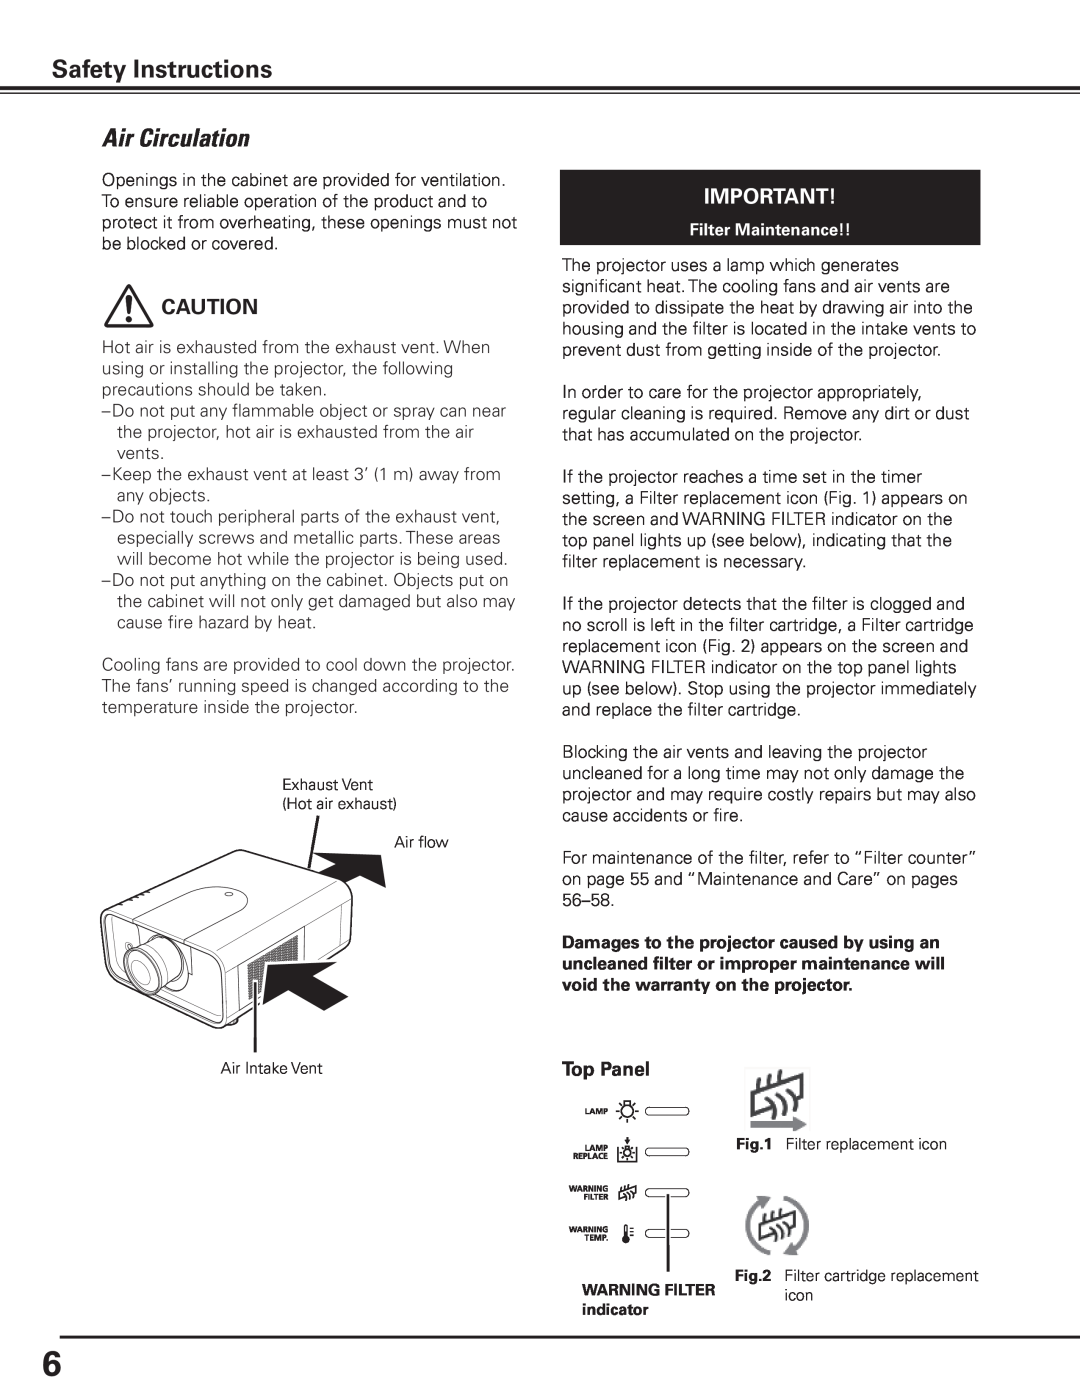 Canon 7585 manual Safety Instructions, Air Circulation, Filter Maintenance 